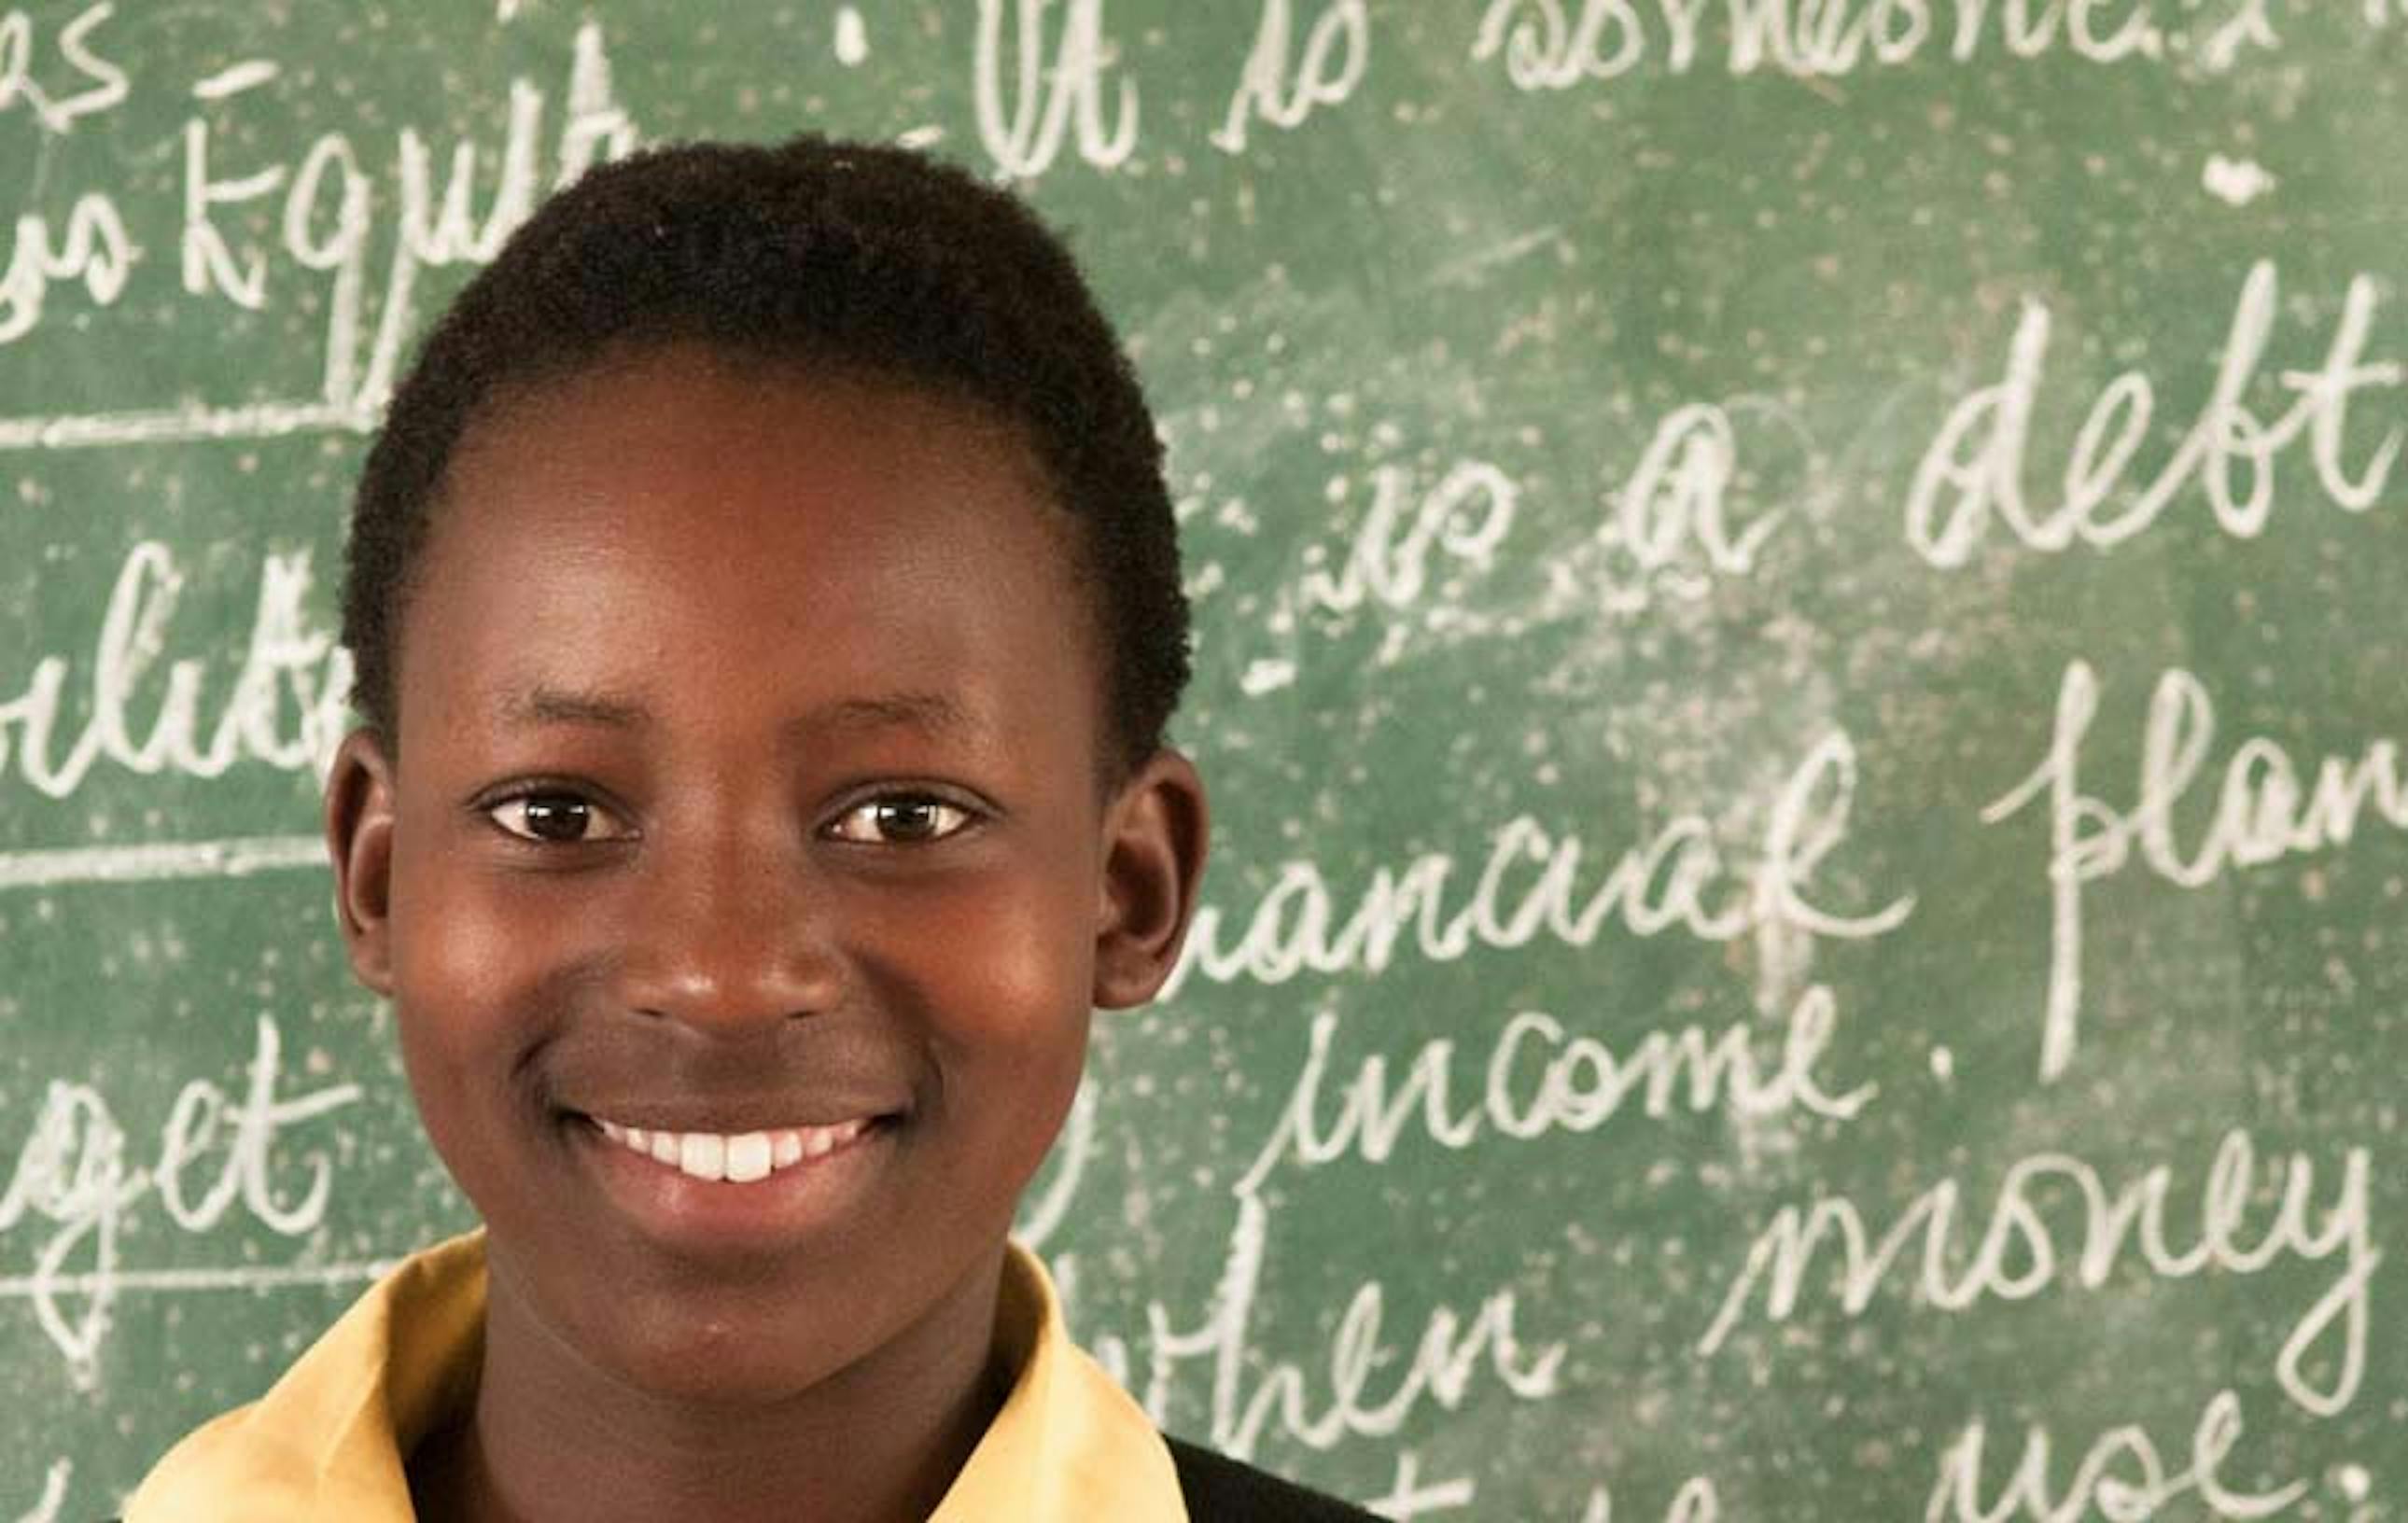 Ikea per UNICEF SoftToys4Education ©UNICEFPFPG2015_3305MiltchevaSOUTH AFRICA 2015